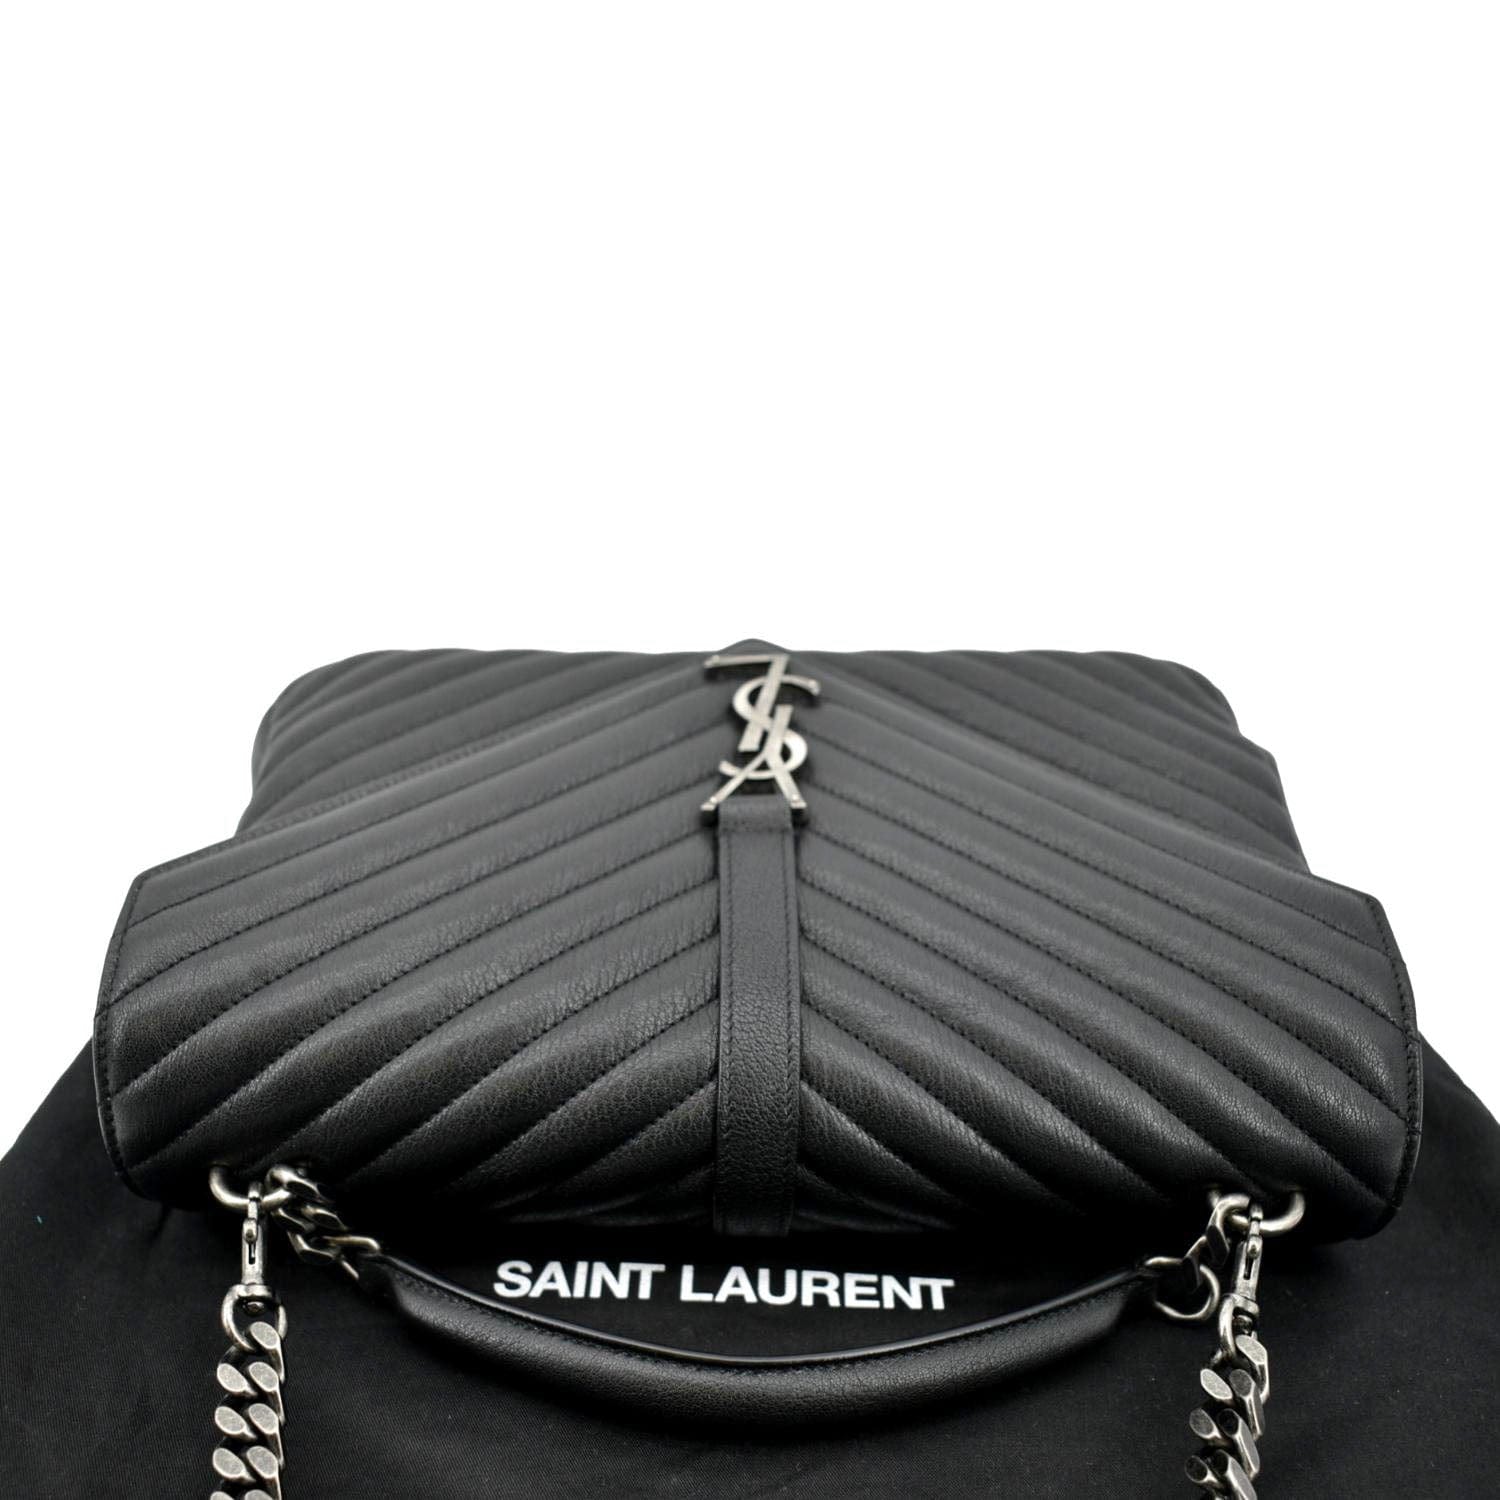 YSL Saint Laurent college bag large size black